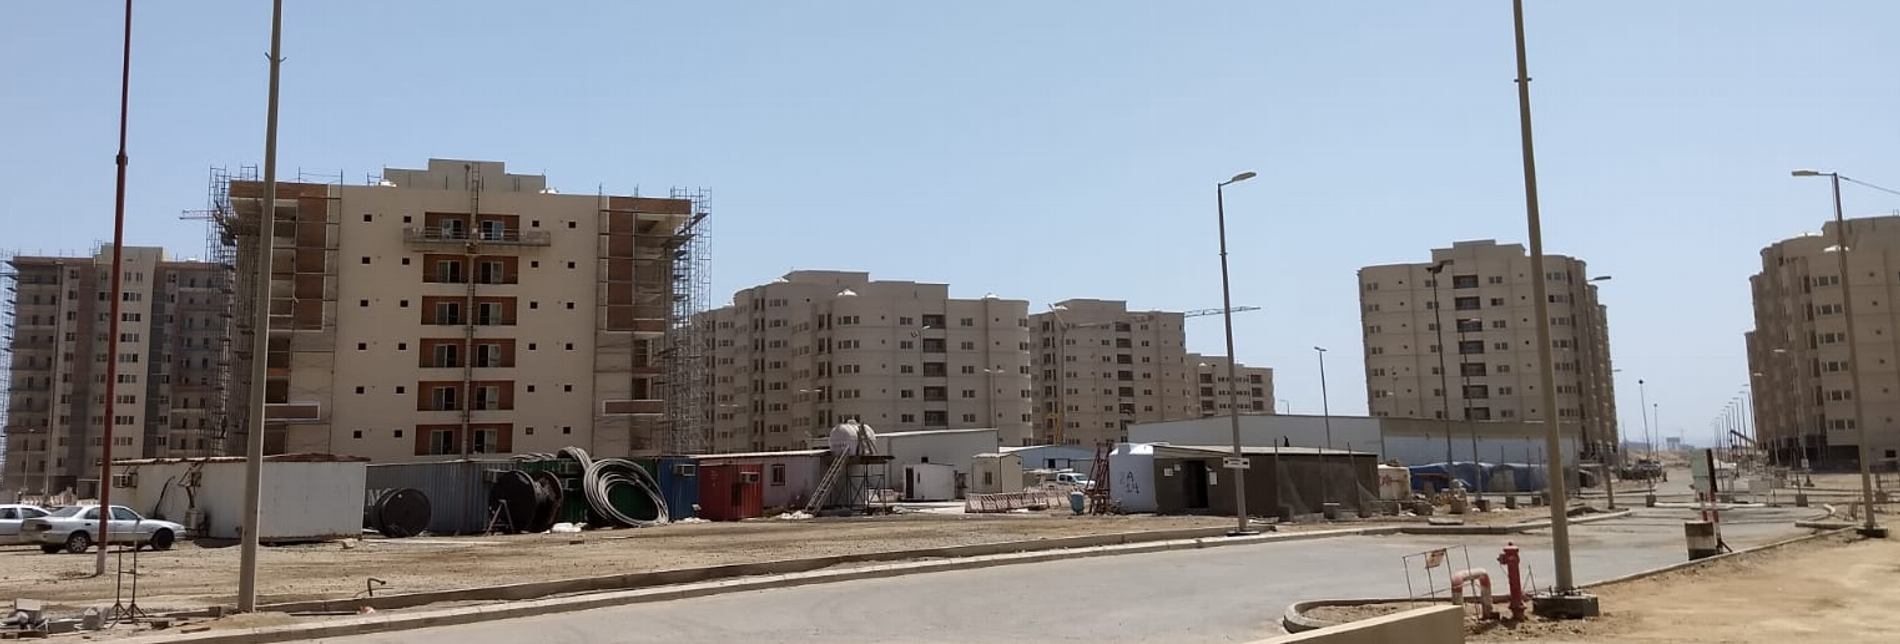 Asia Al Raidah Housing Complex Project Jeddah Arabia S